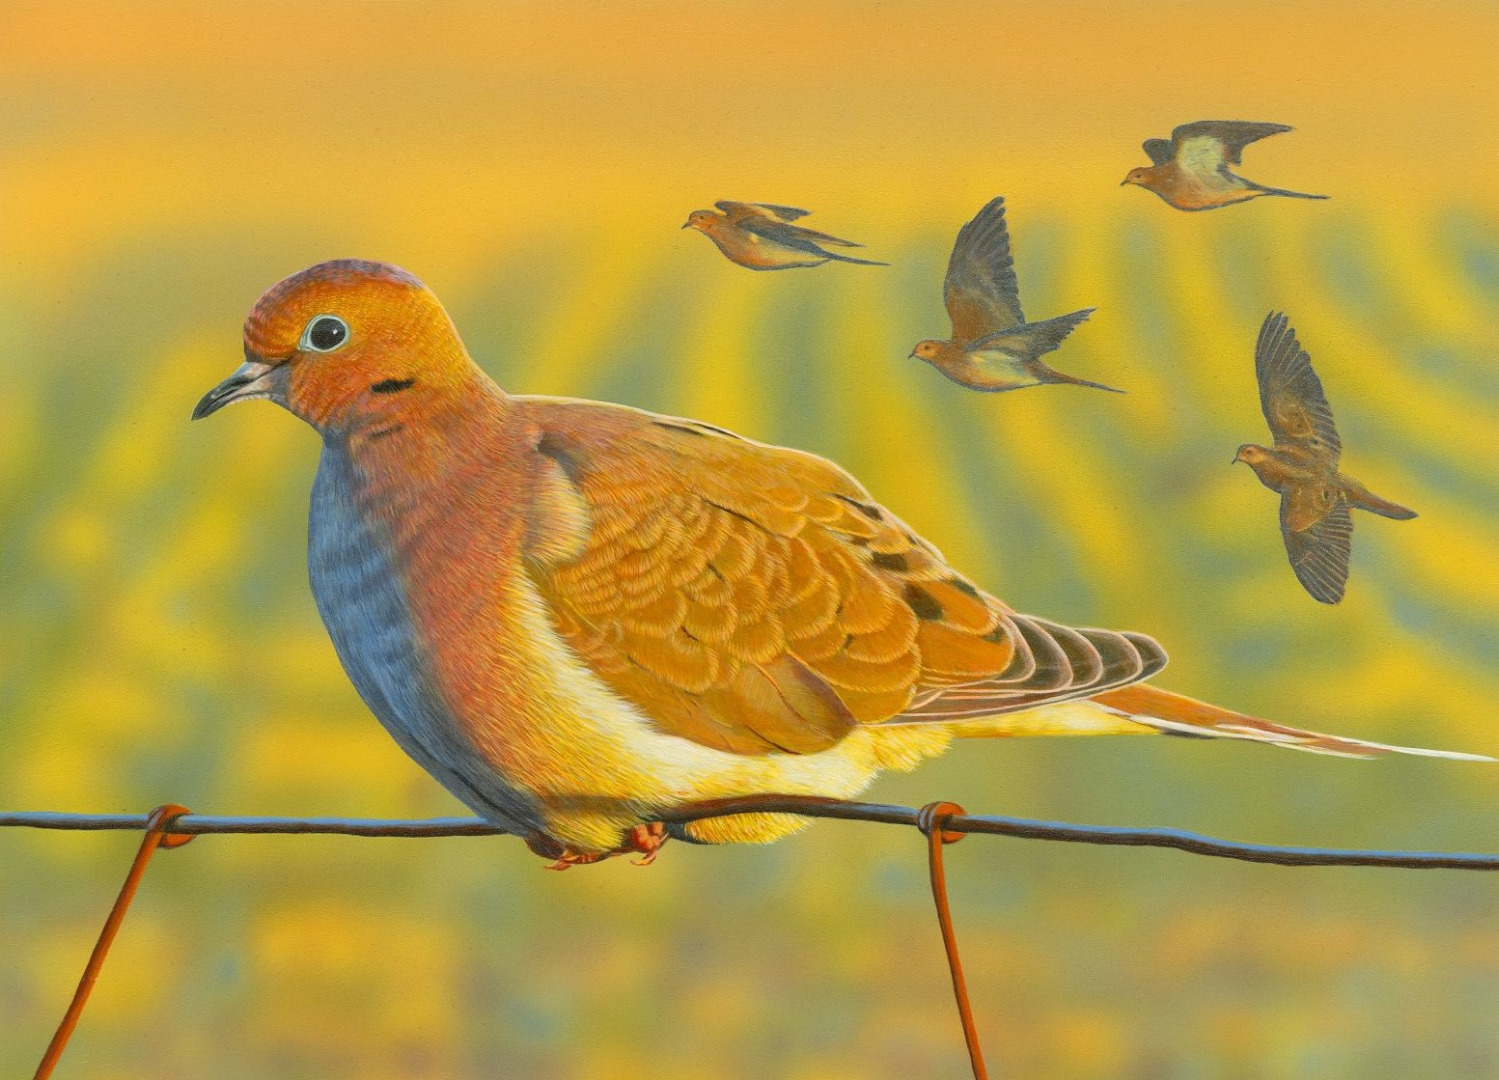 CDFW Seeks Artists to Enter California Upland Game Bird Stamp Art Contest